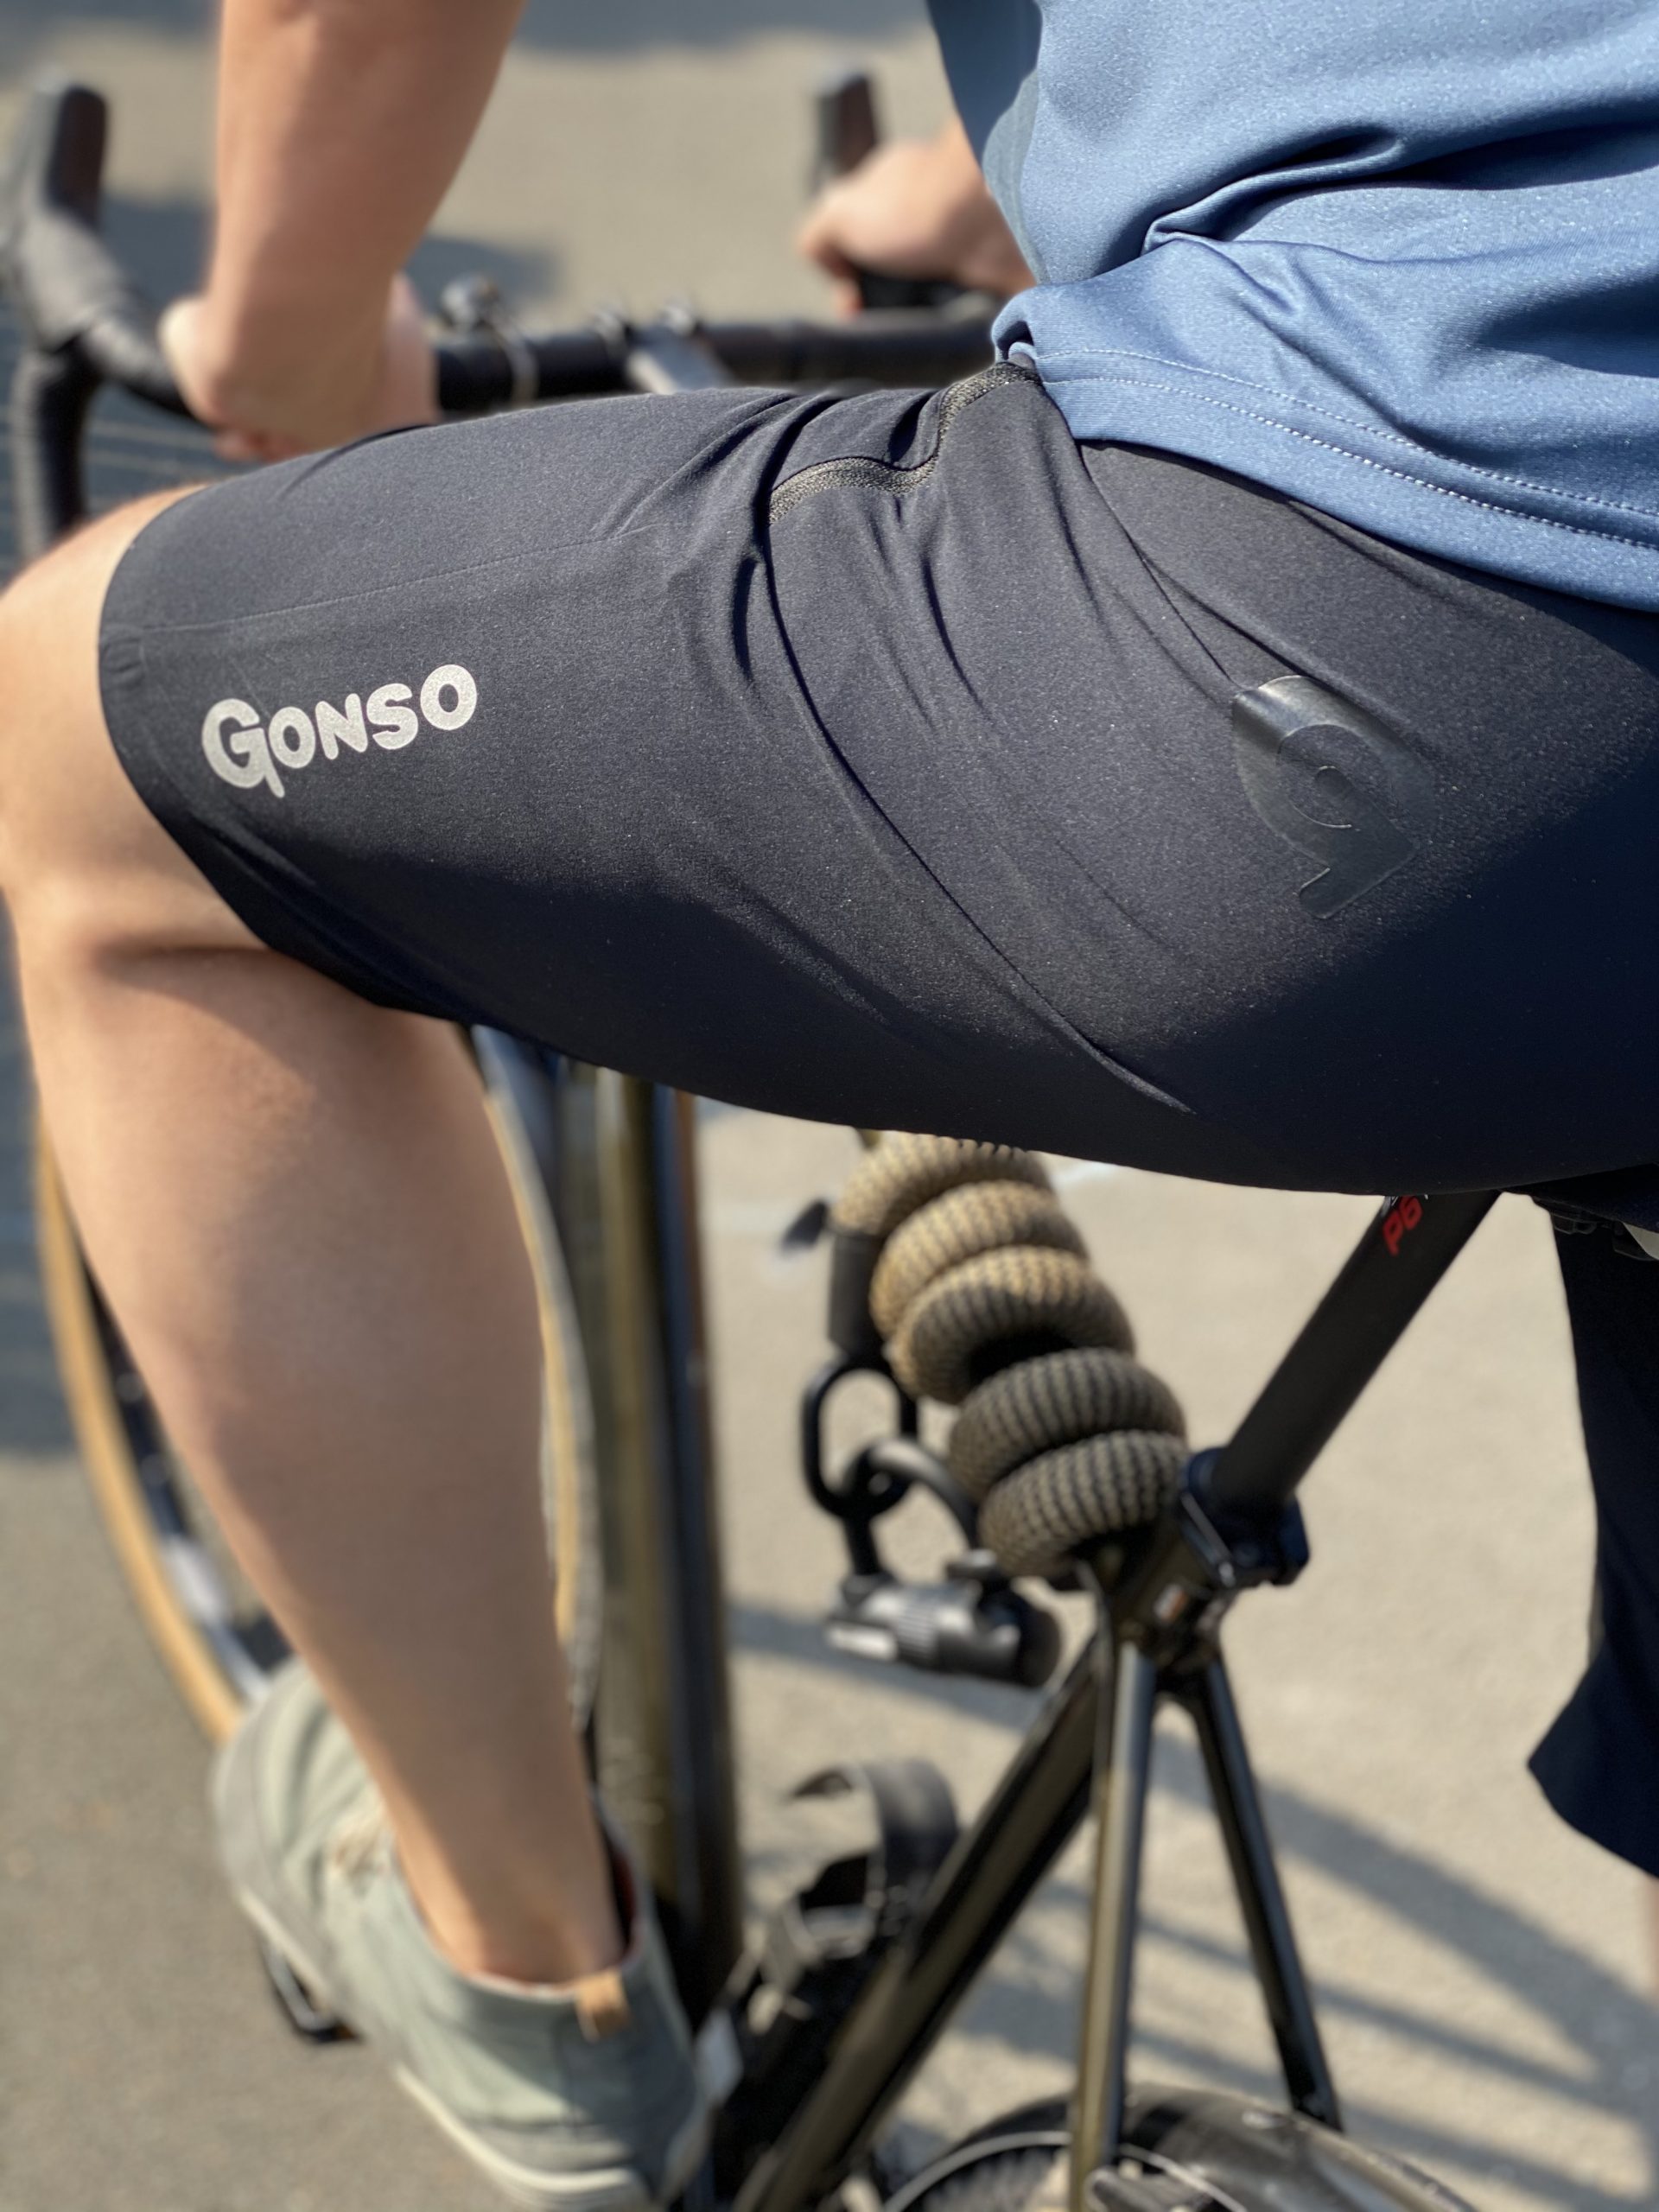 GONSO Sitivo Shorts im Test Kurze Fahrradhose 